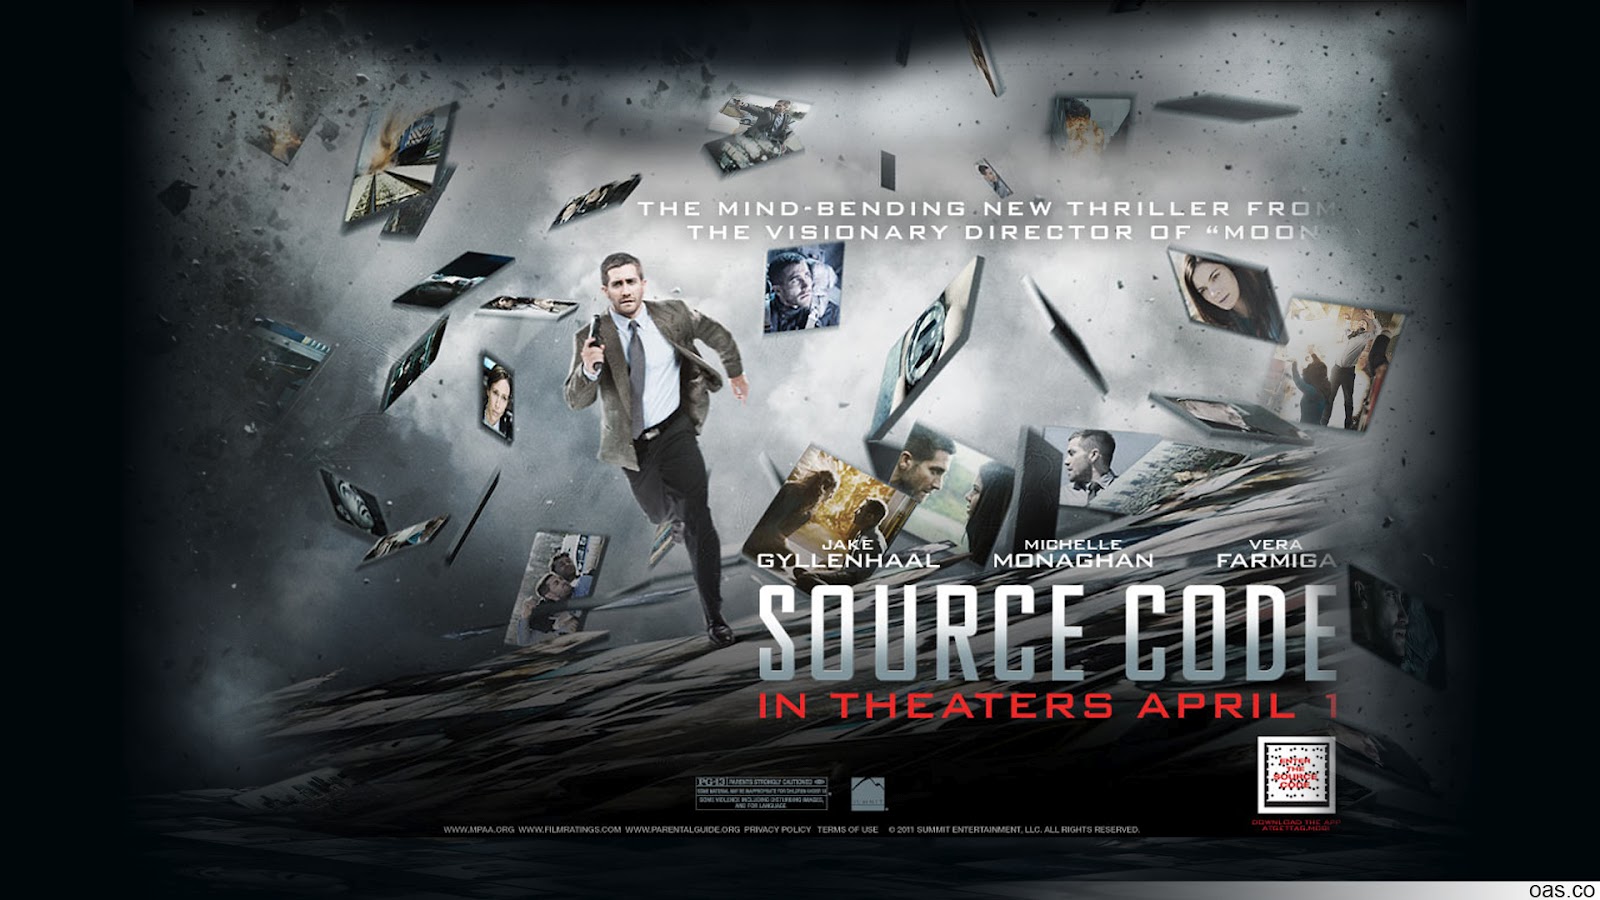 Source Code 2011 English (dvdrip) 480p Size